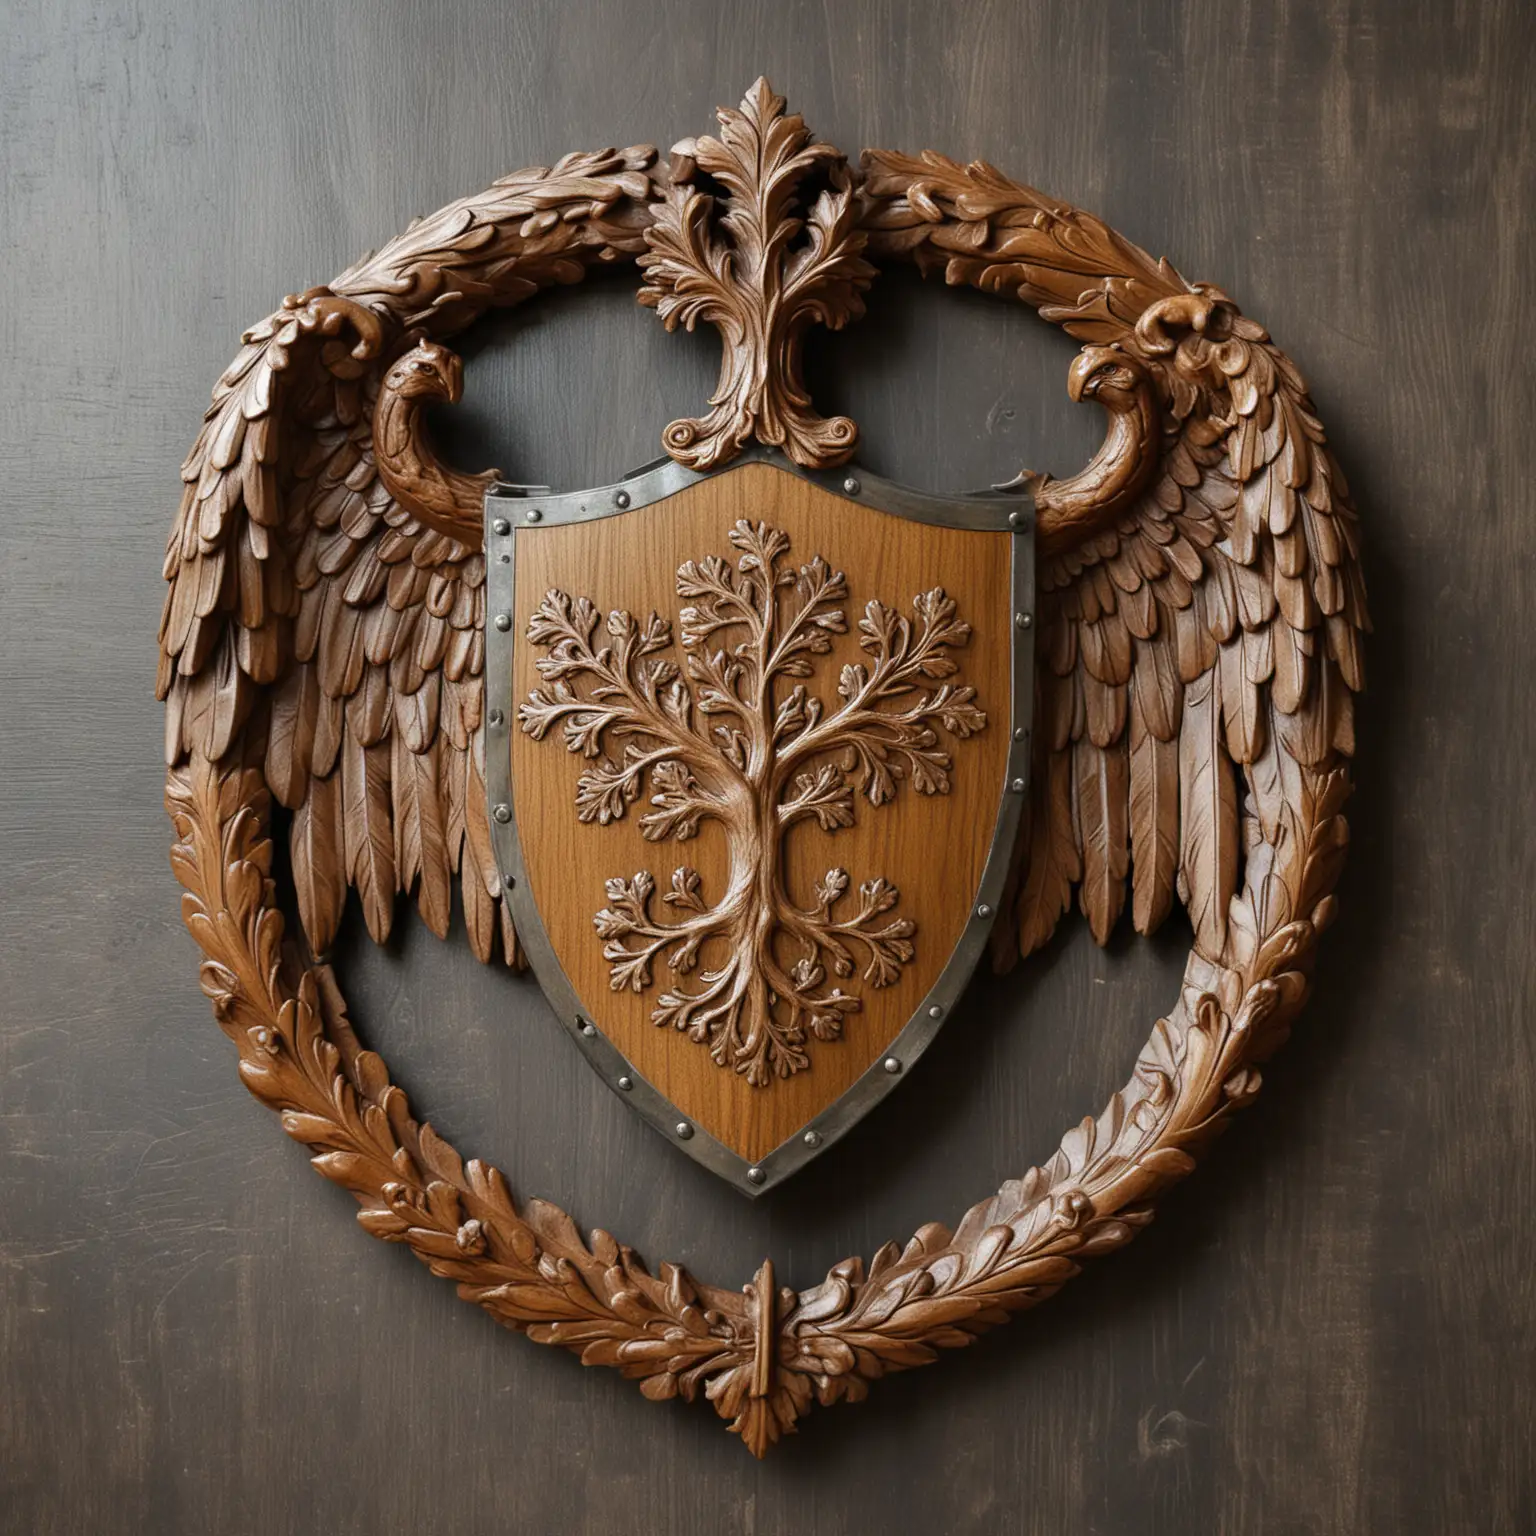 shield coat of arms, wings, oak tree, metal